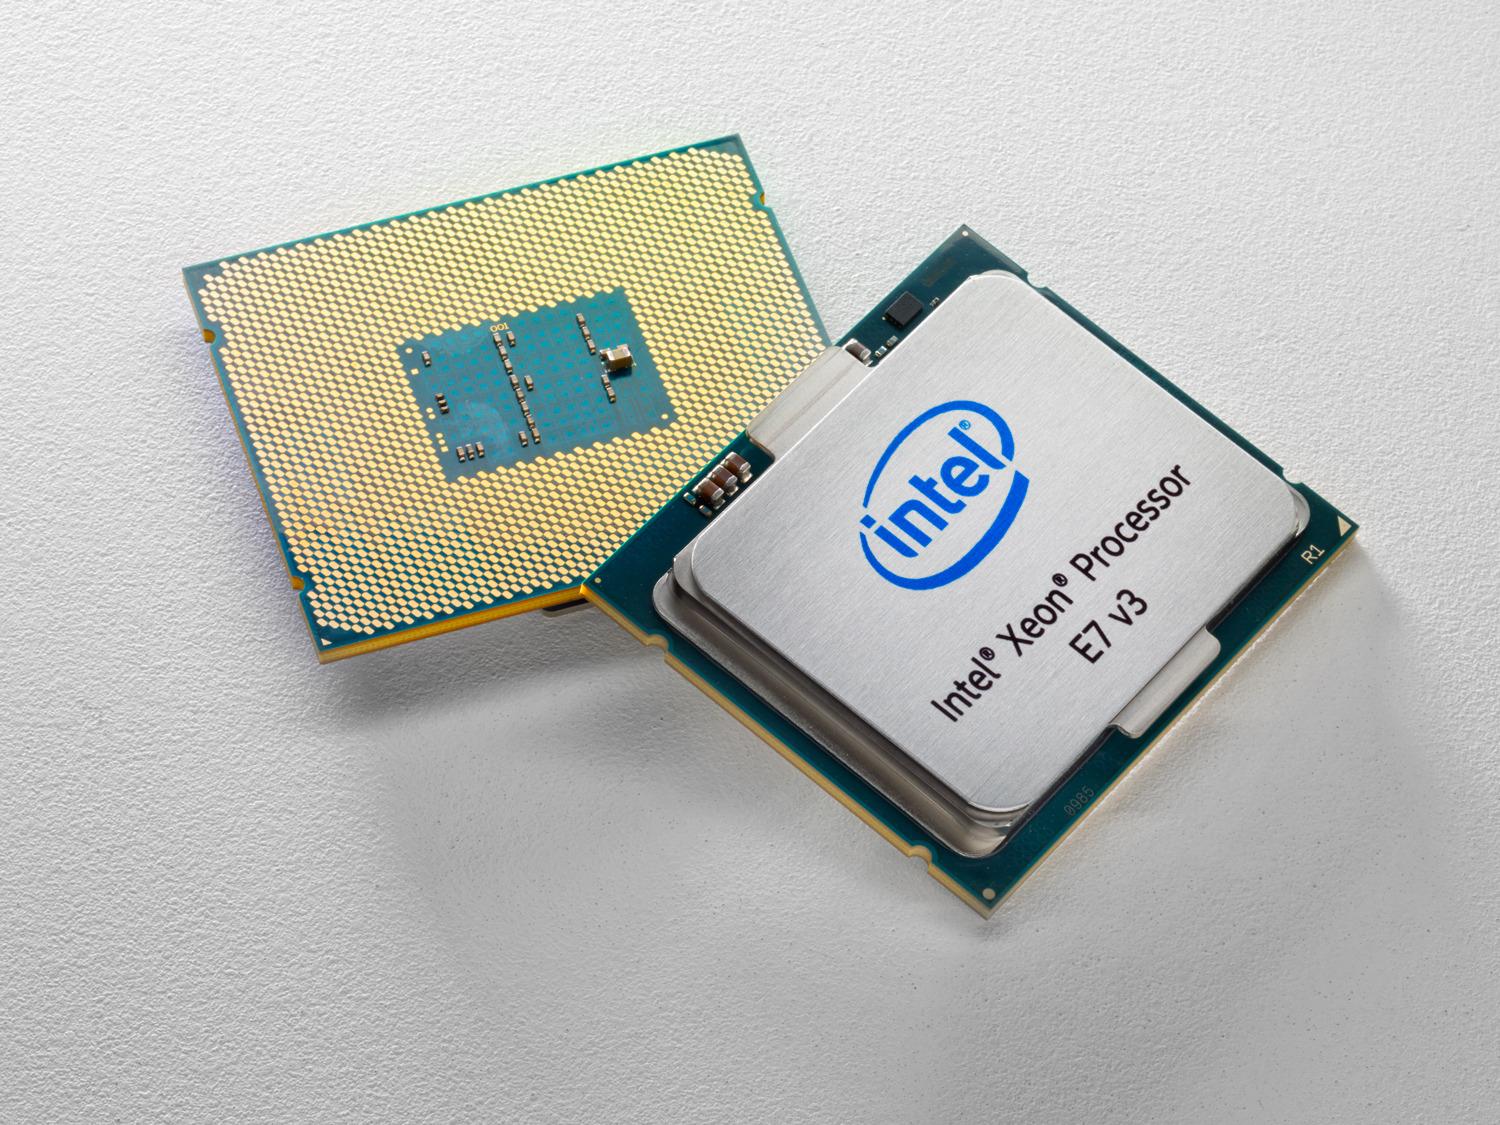 Intel Xeon E7 v3. Foto: Intel